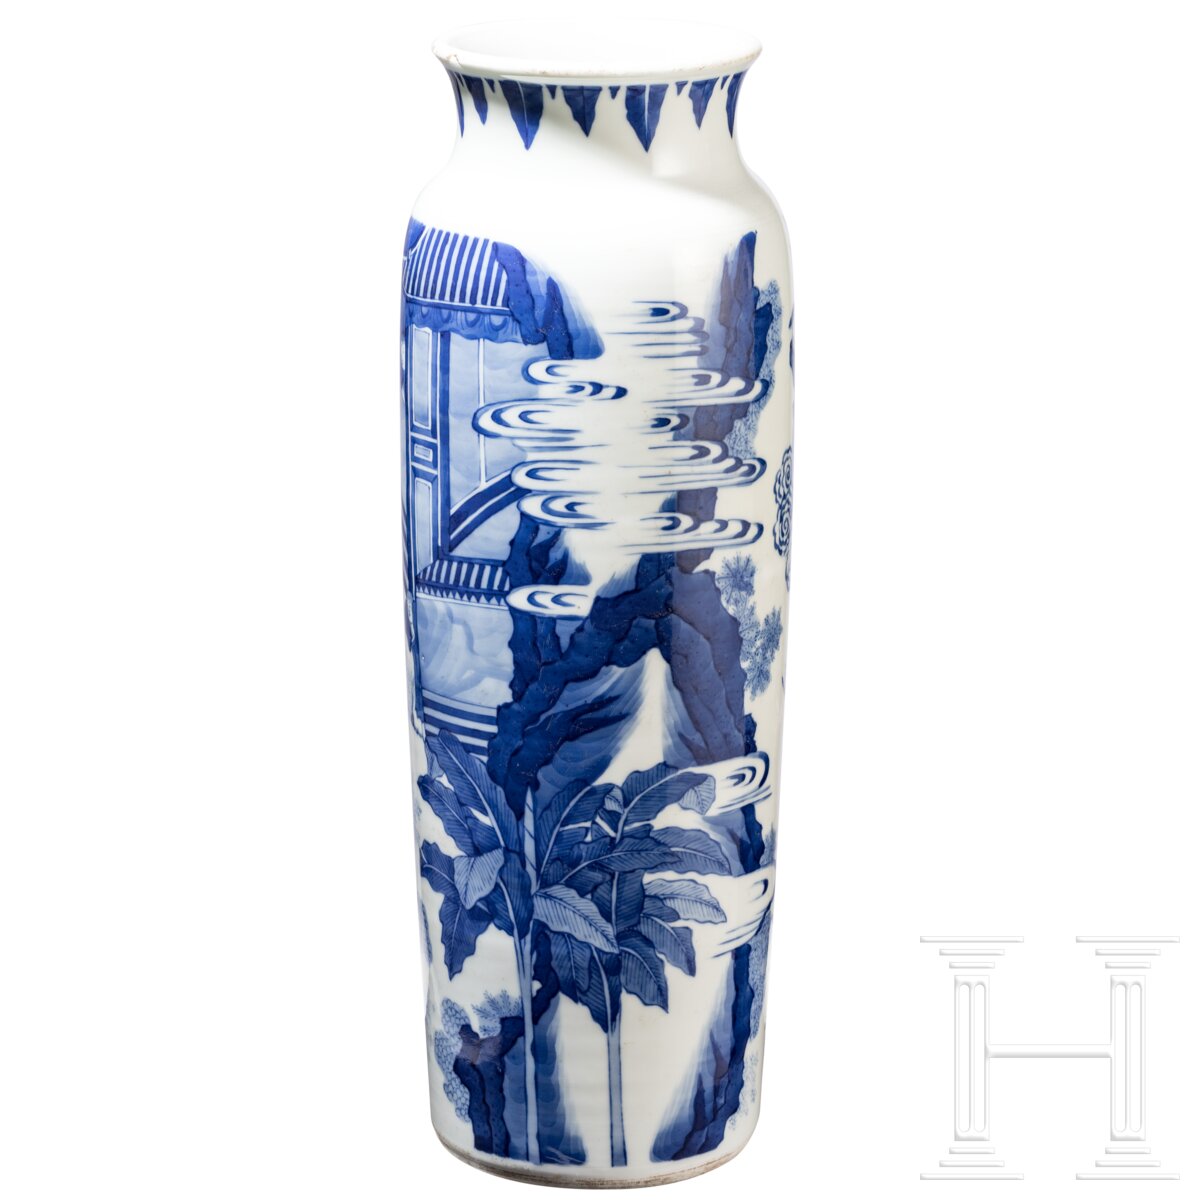 Große blaue-weiße Vase mit Soldatenszene, China, wohl Kangxi-Periode (18. Jhdt.) - Image 3 of 20